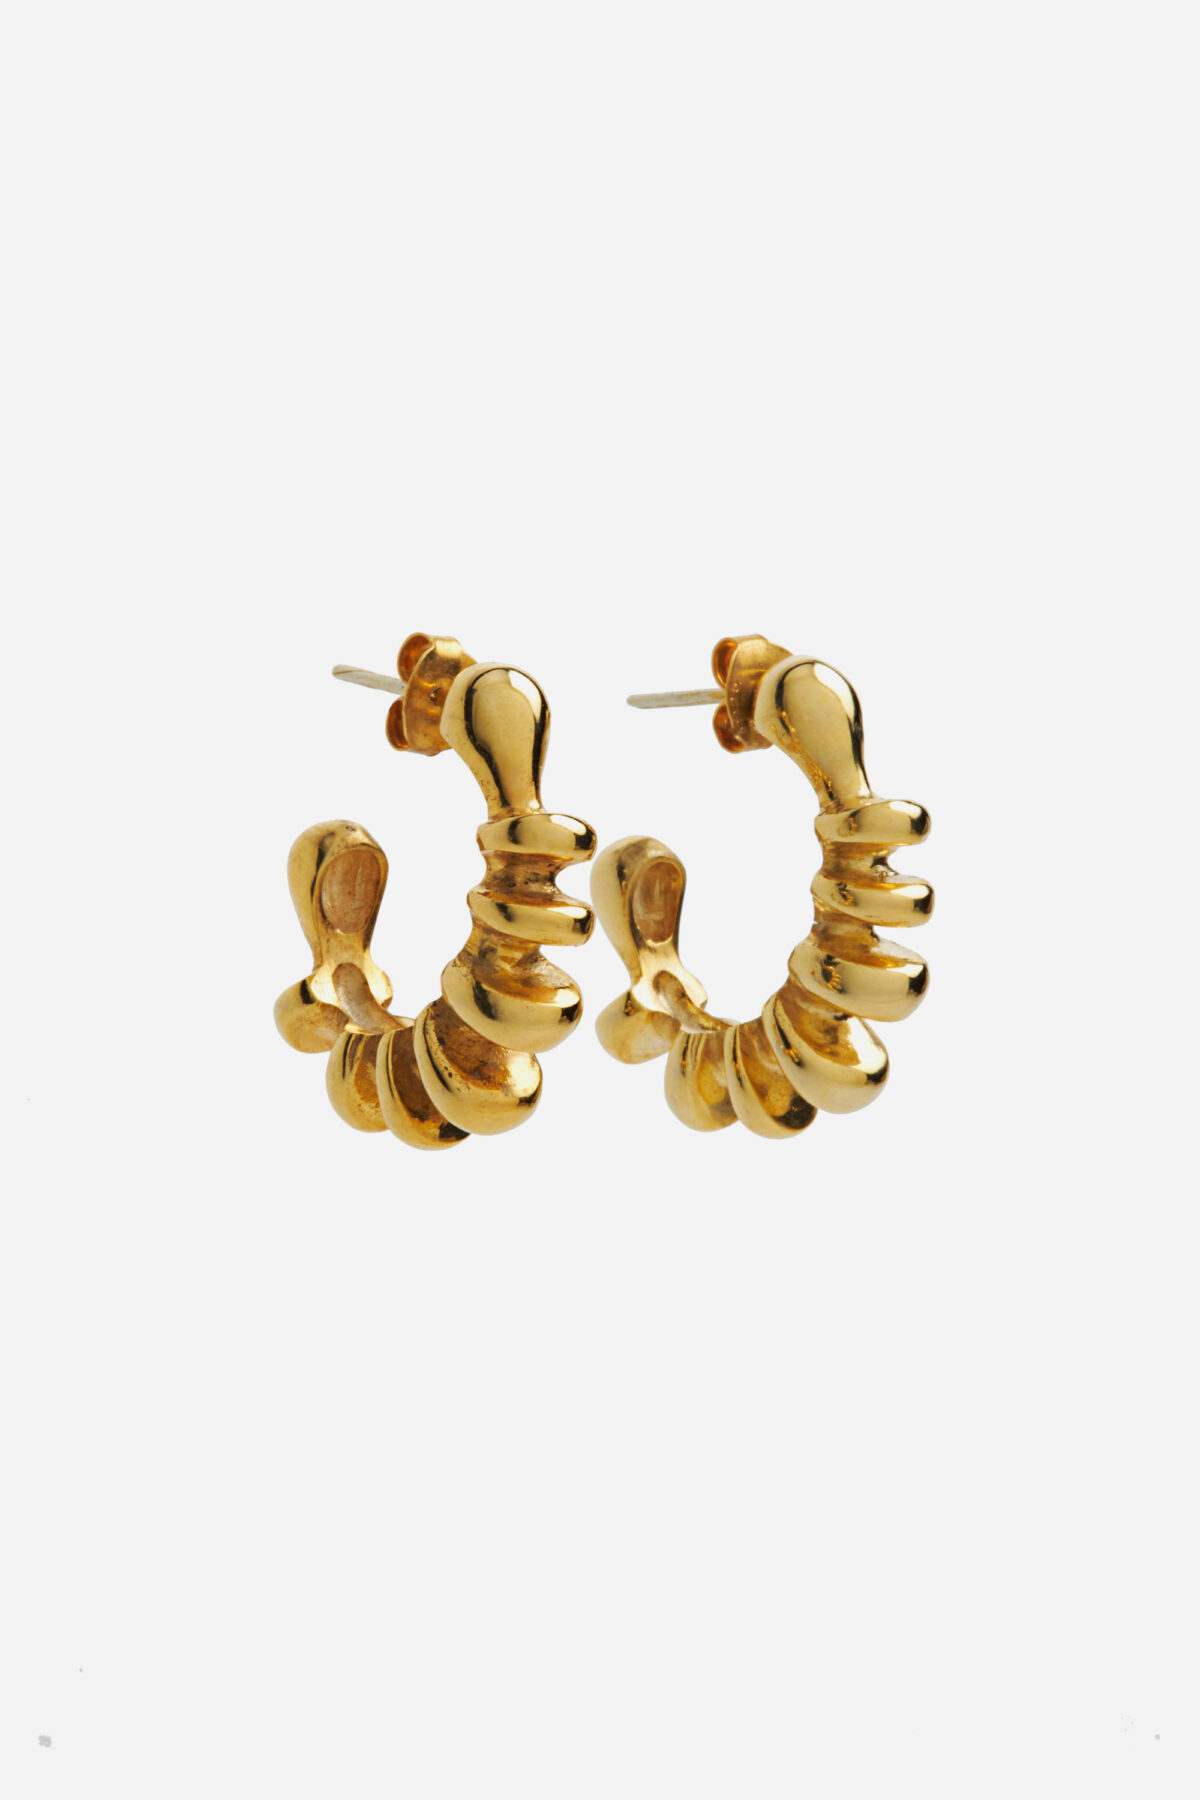 wavy-loop-earrings-gold-plated-sterling-silver-kimale-earrings-matchboxathens